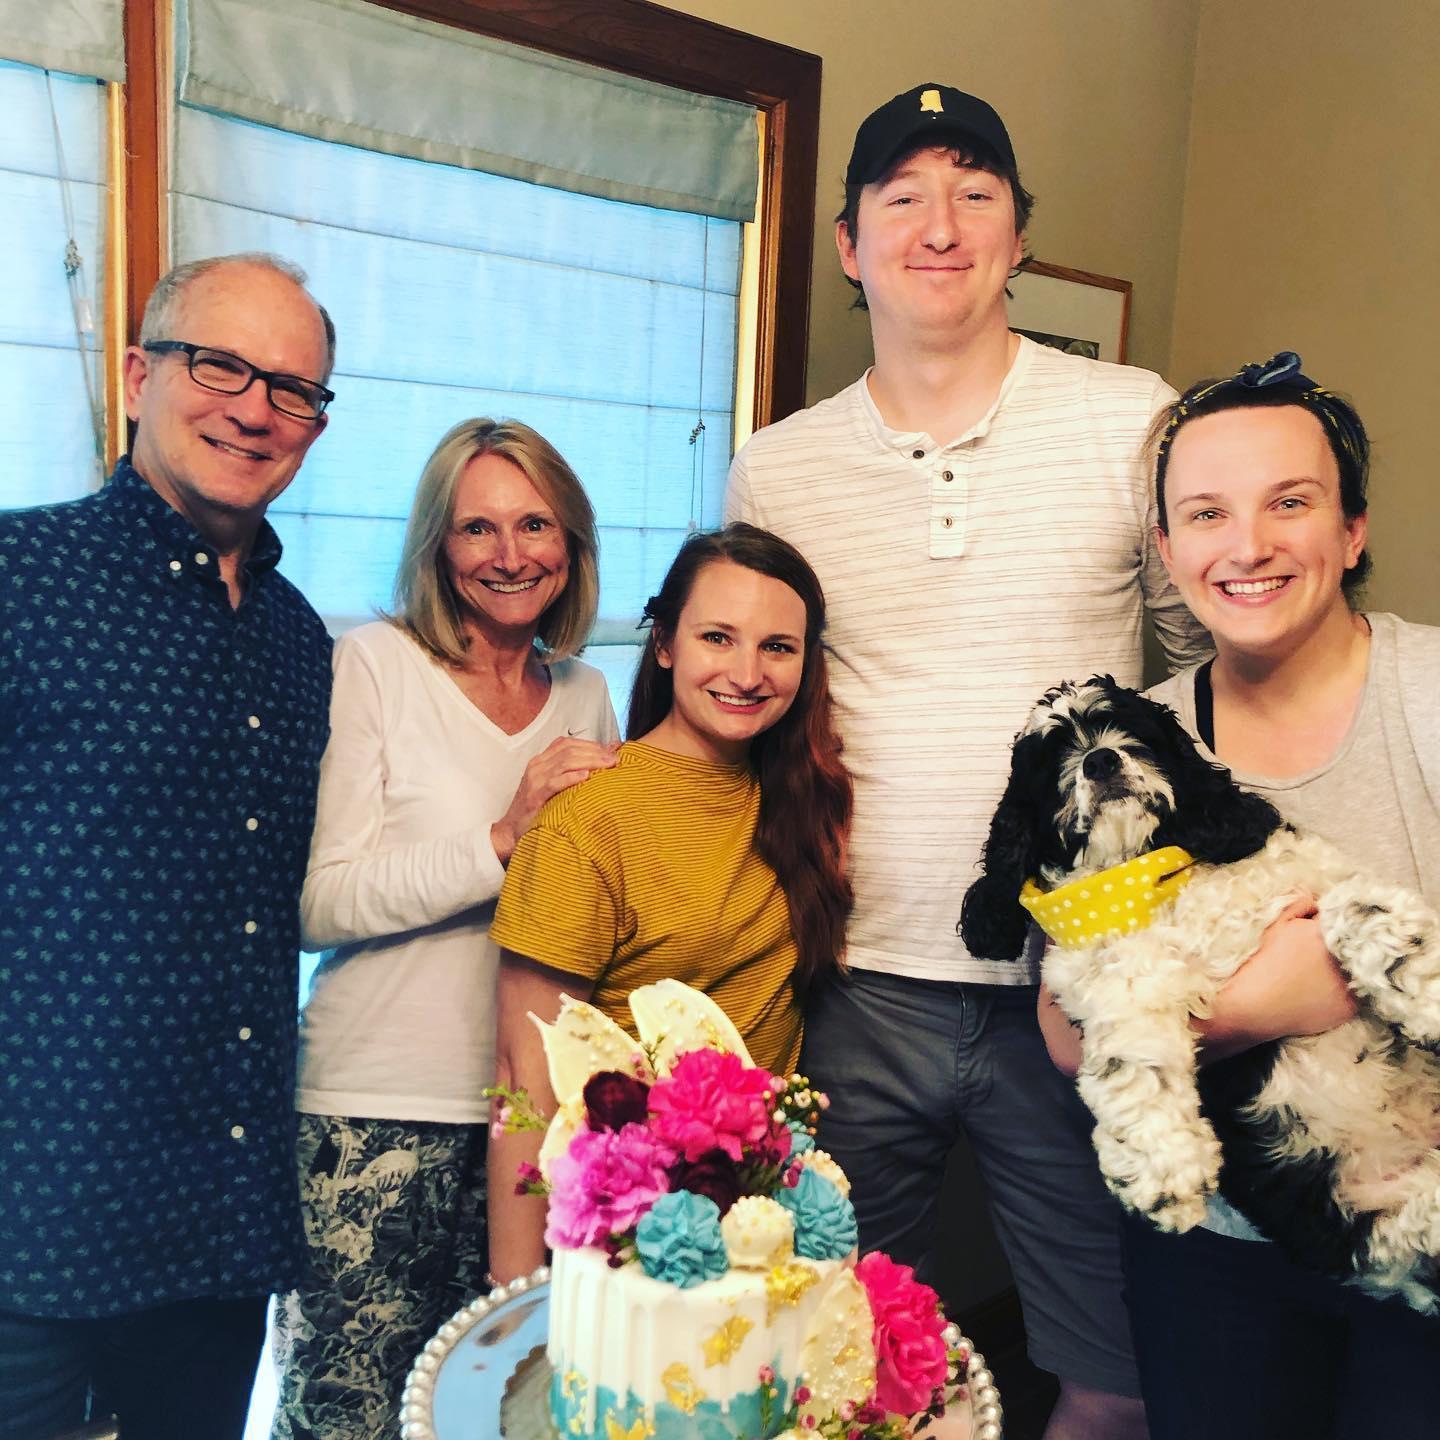 Celebrating Hannah's birthday with family - Jackson, MS 2020